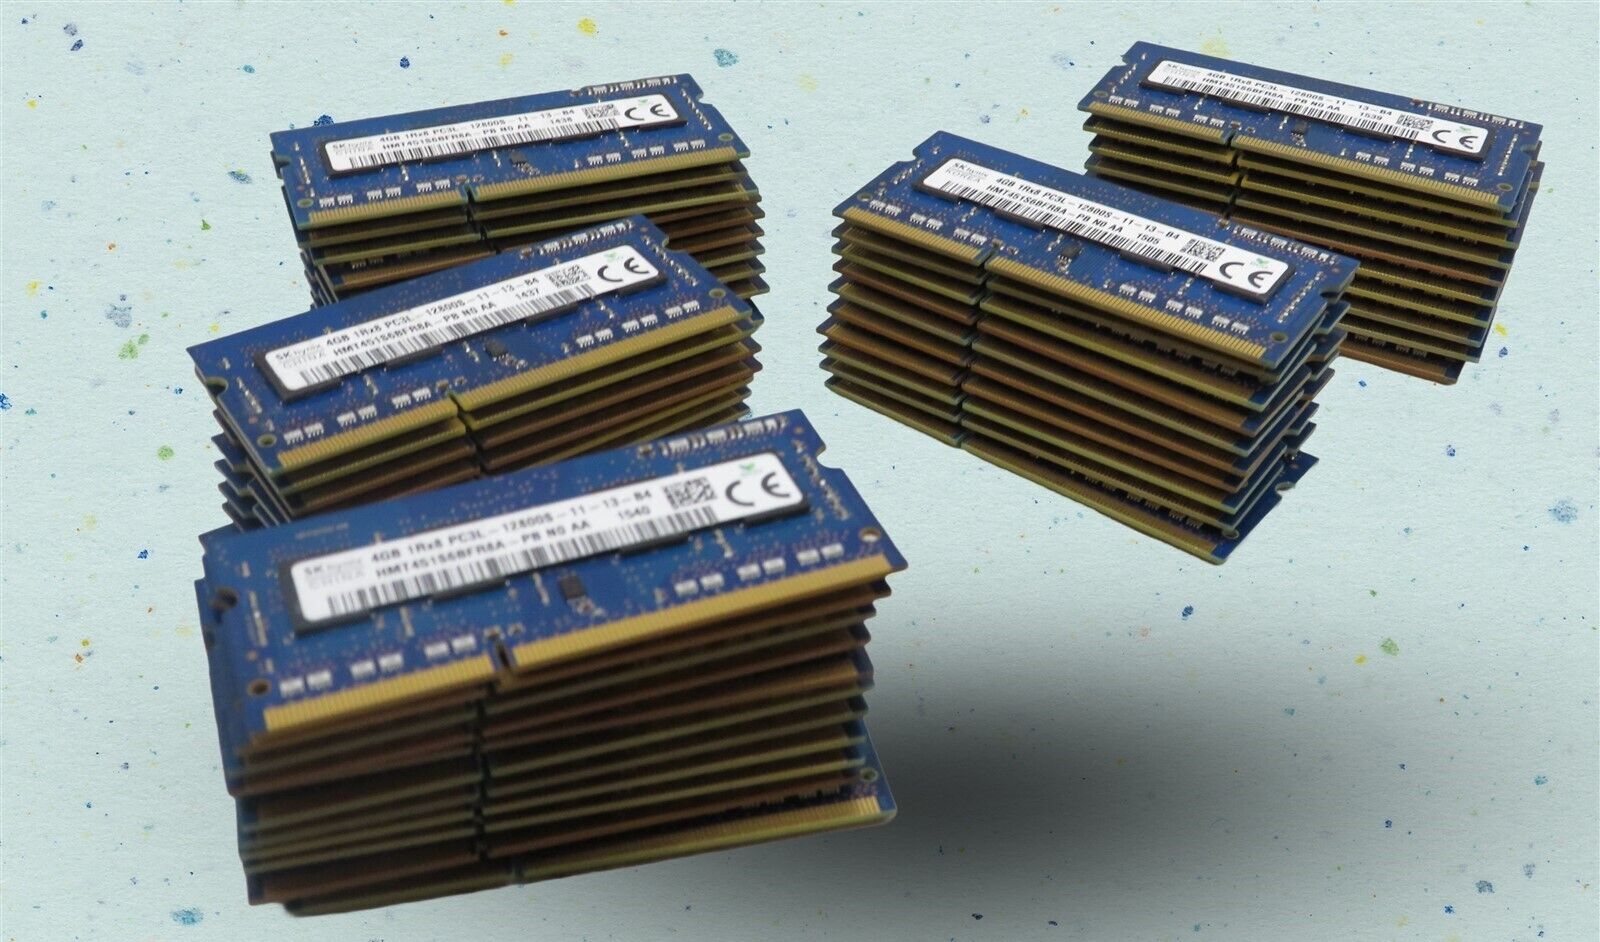 Lot of 50 Hynix 4GB 1Rx8 PC3L-12800S-11-13-B4 DDR3 Laptop RAM Memory